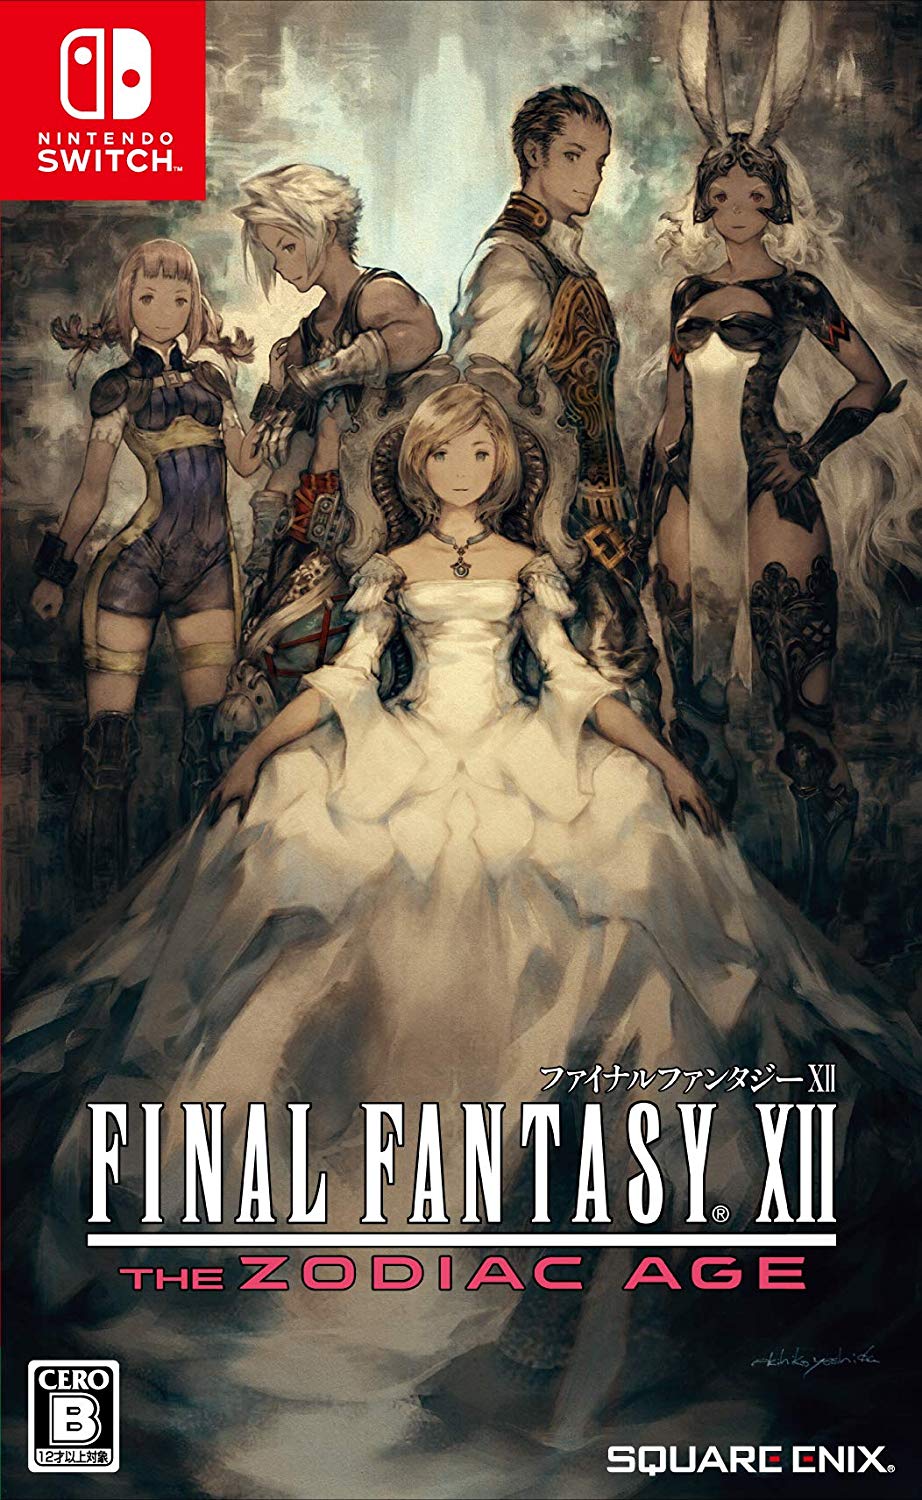 Japan Final Fantasy XII The Zodiac Age cover art